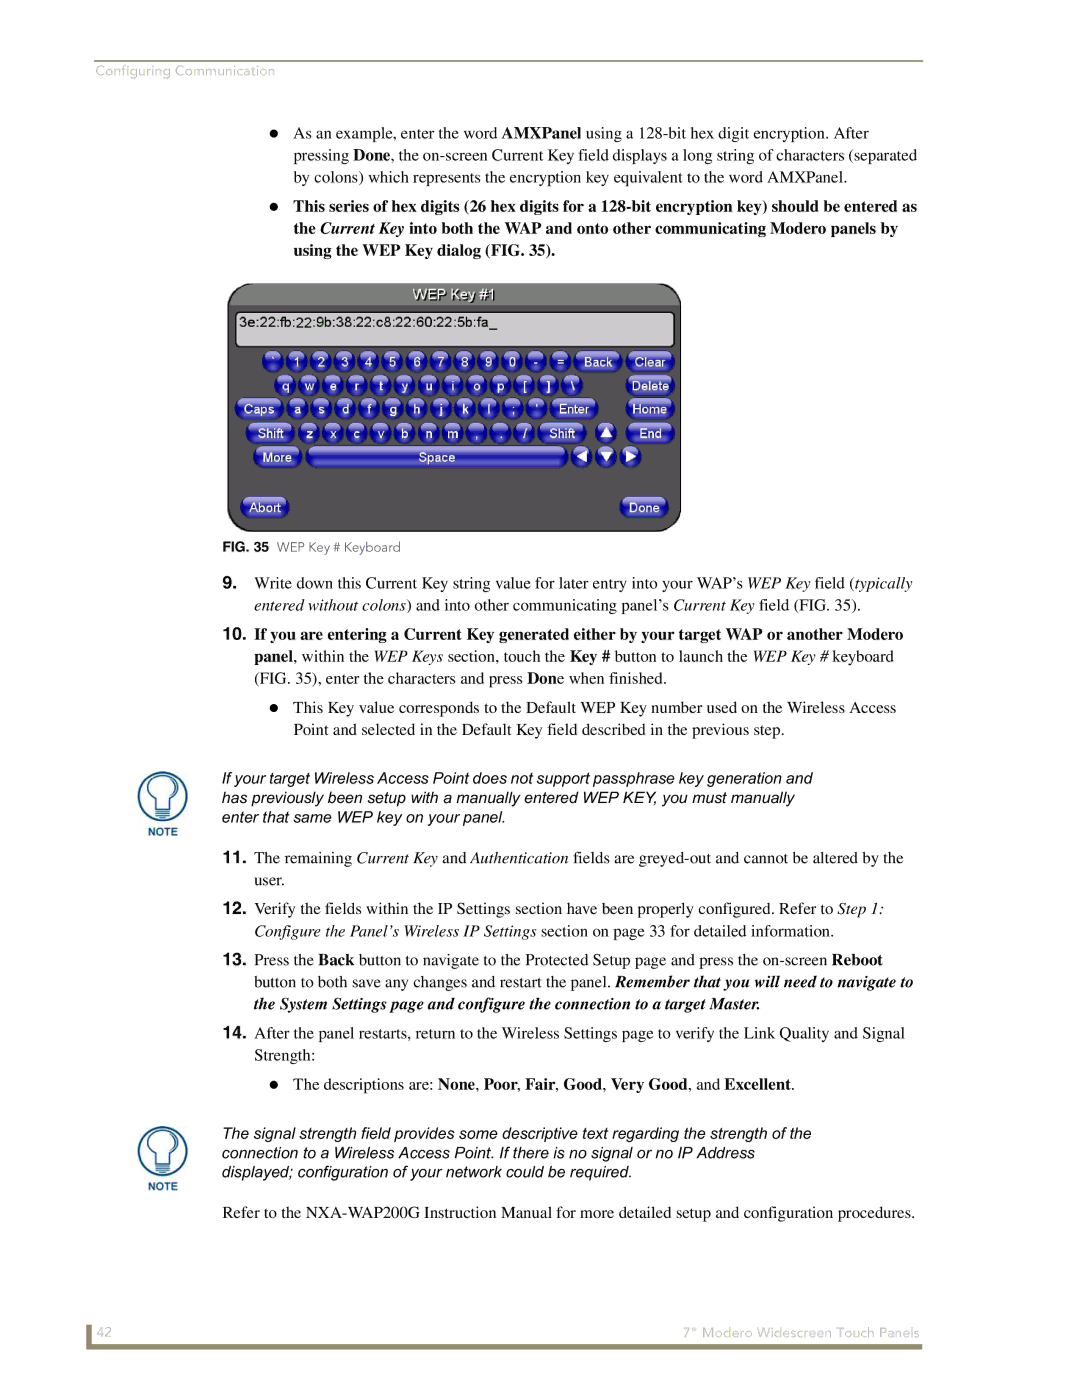 AMX NXD-700Vi manual WEP Key # Keyboard 